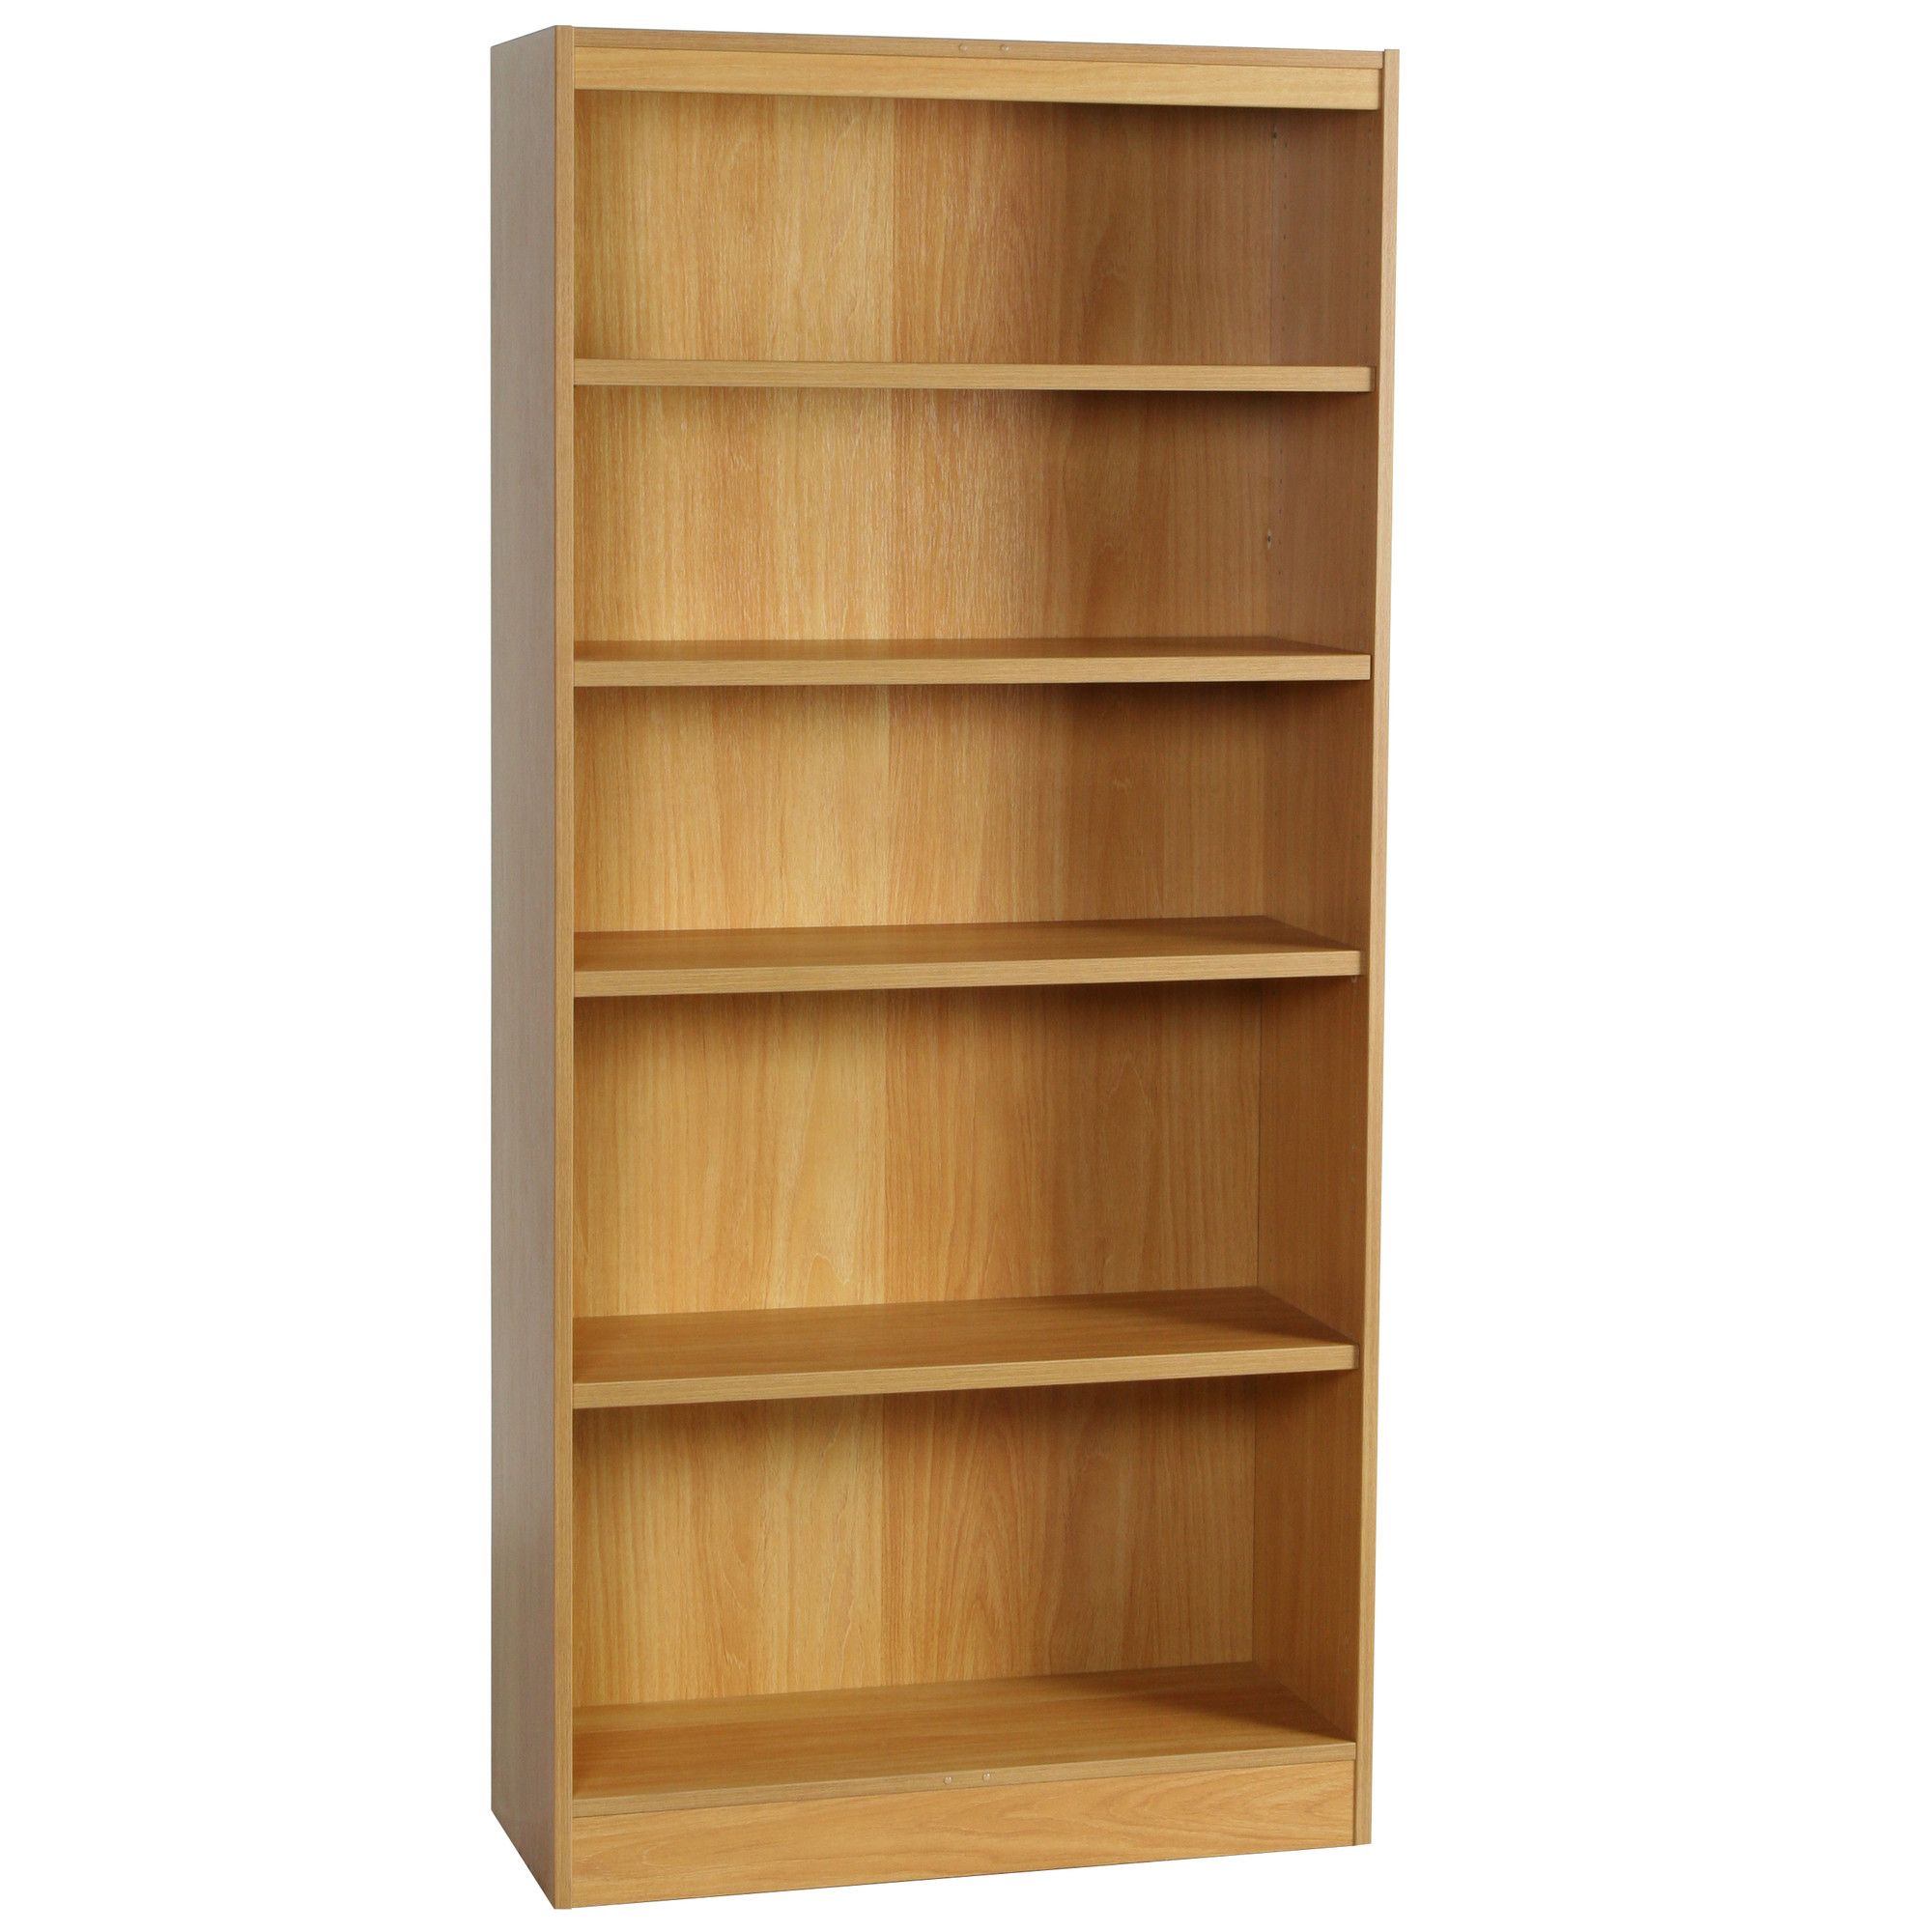 Enduro Five Shelf Tall Narrow Bookcase - Beech at Tesco Direct